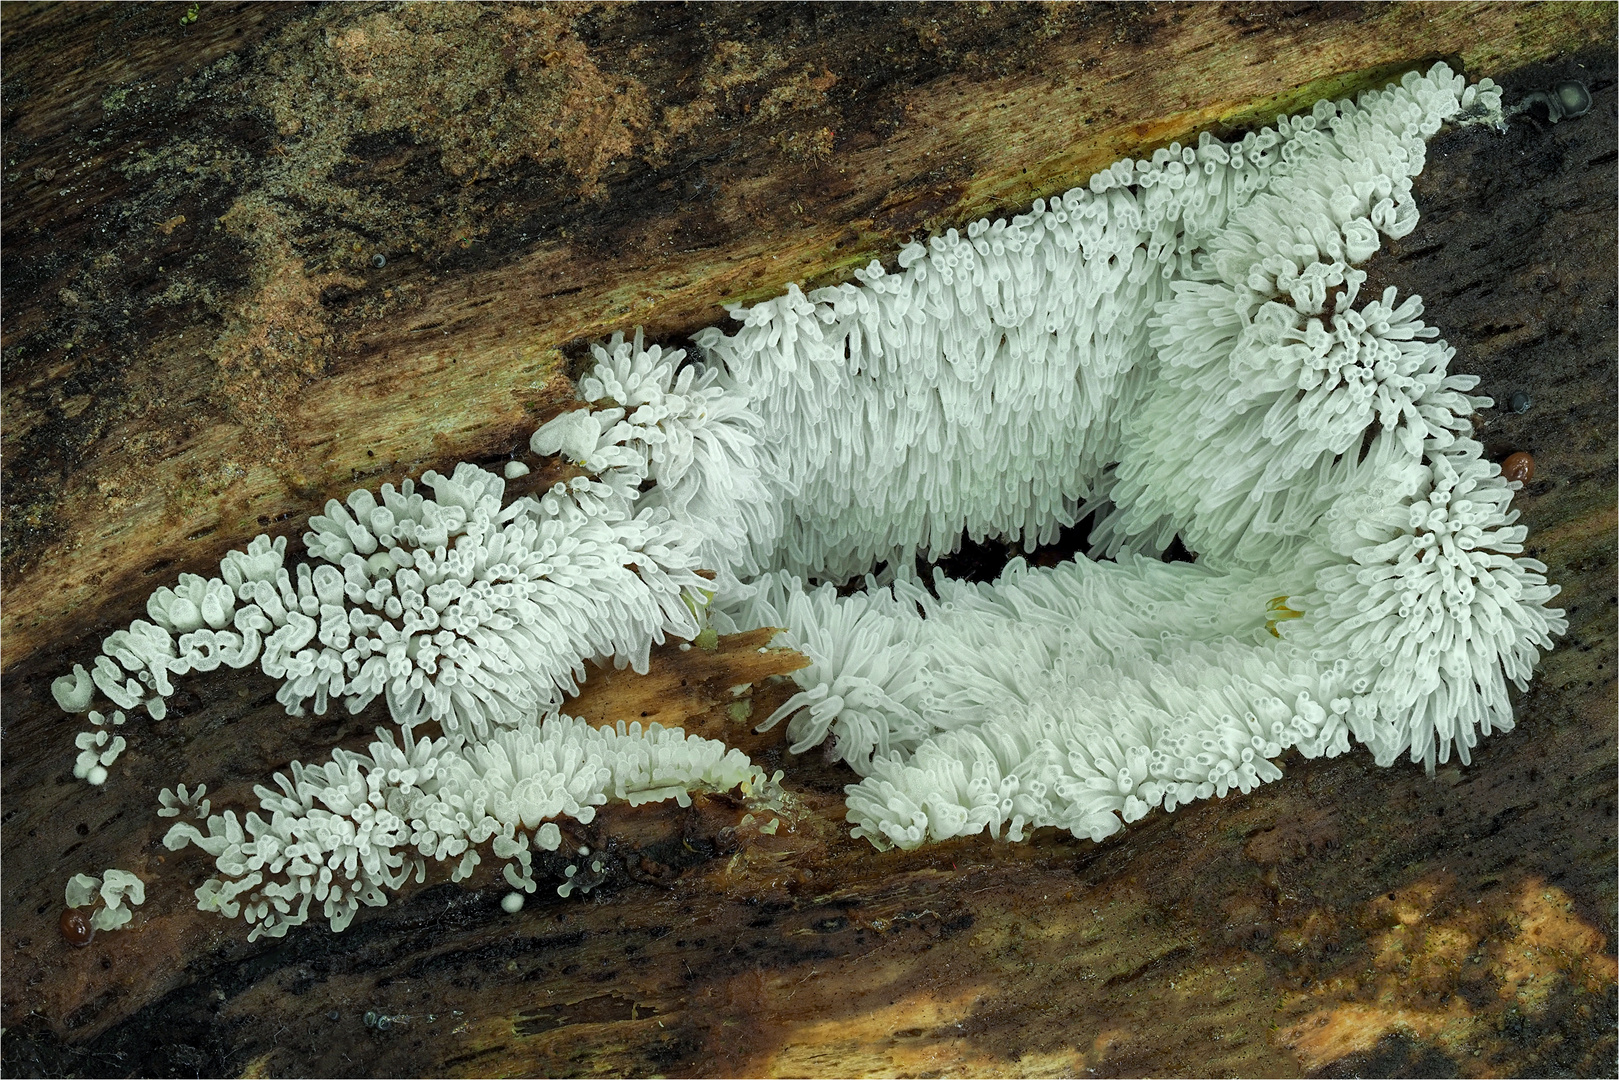 Geweihförmiger Schleimpilz (Ceratiomyxa fruticulosa)